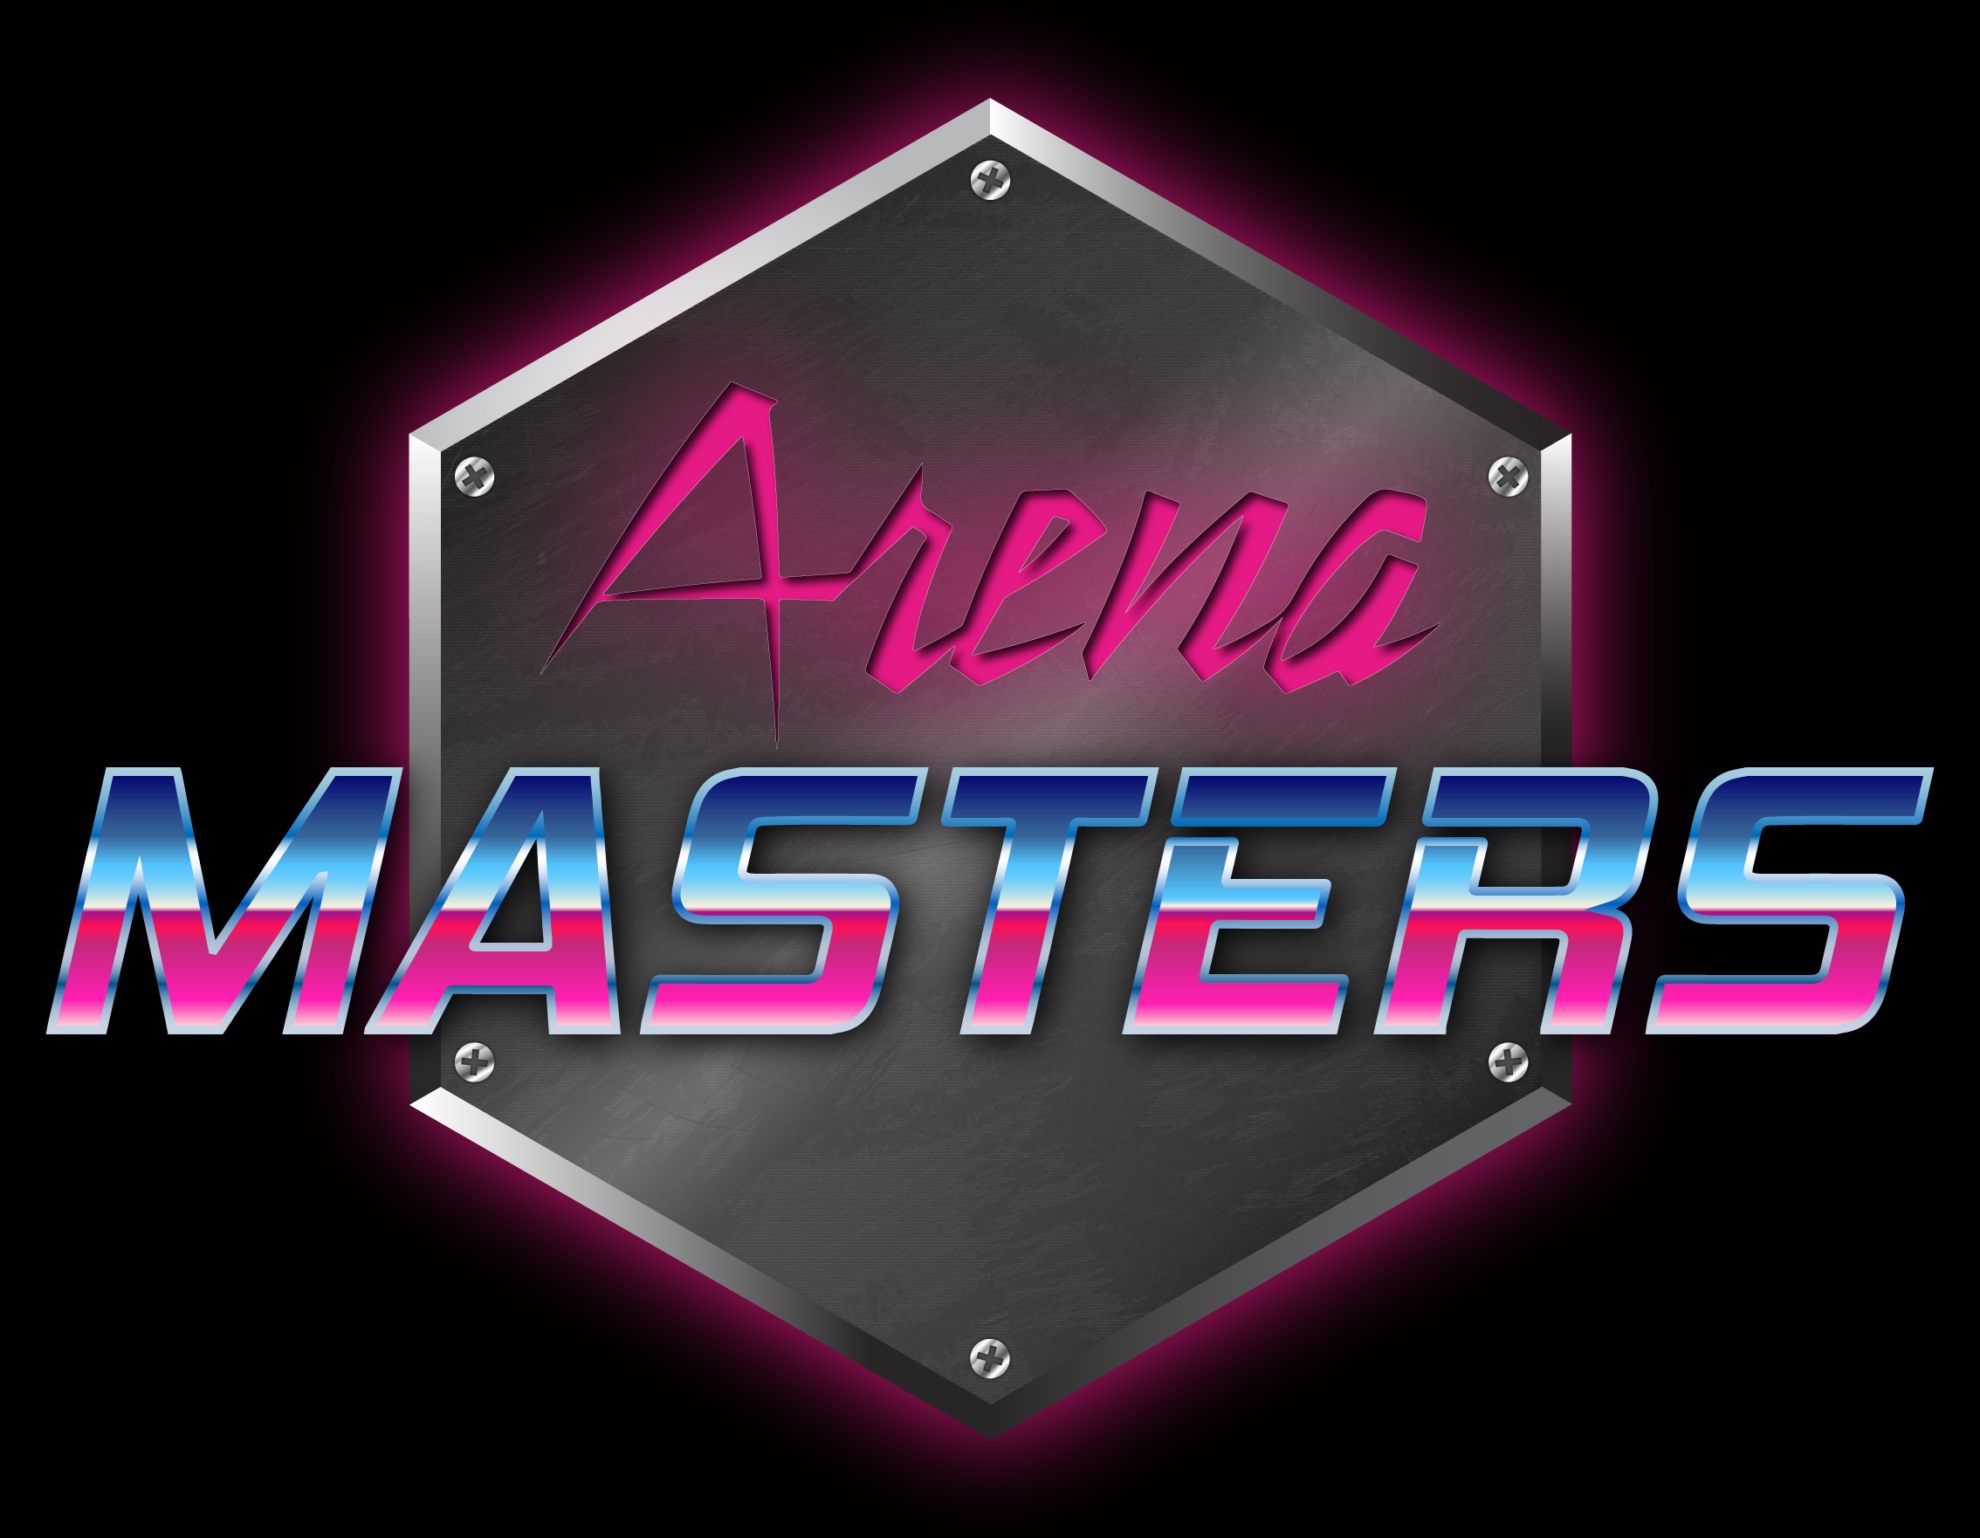 Arena master